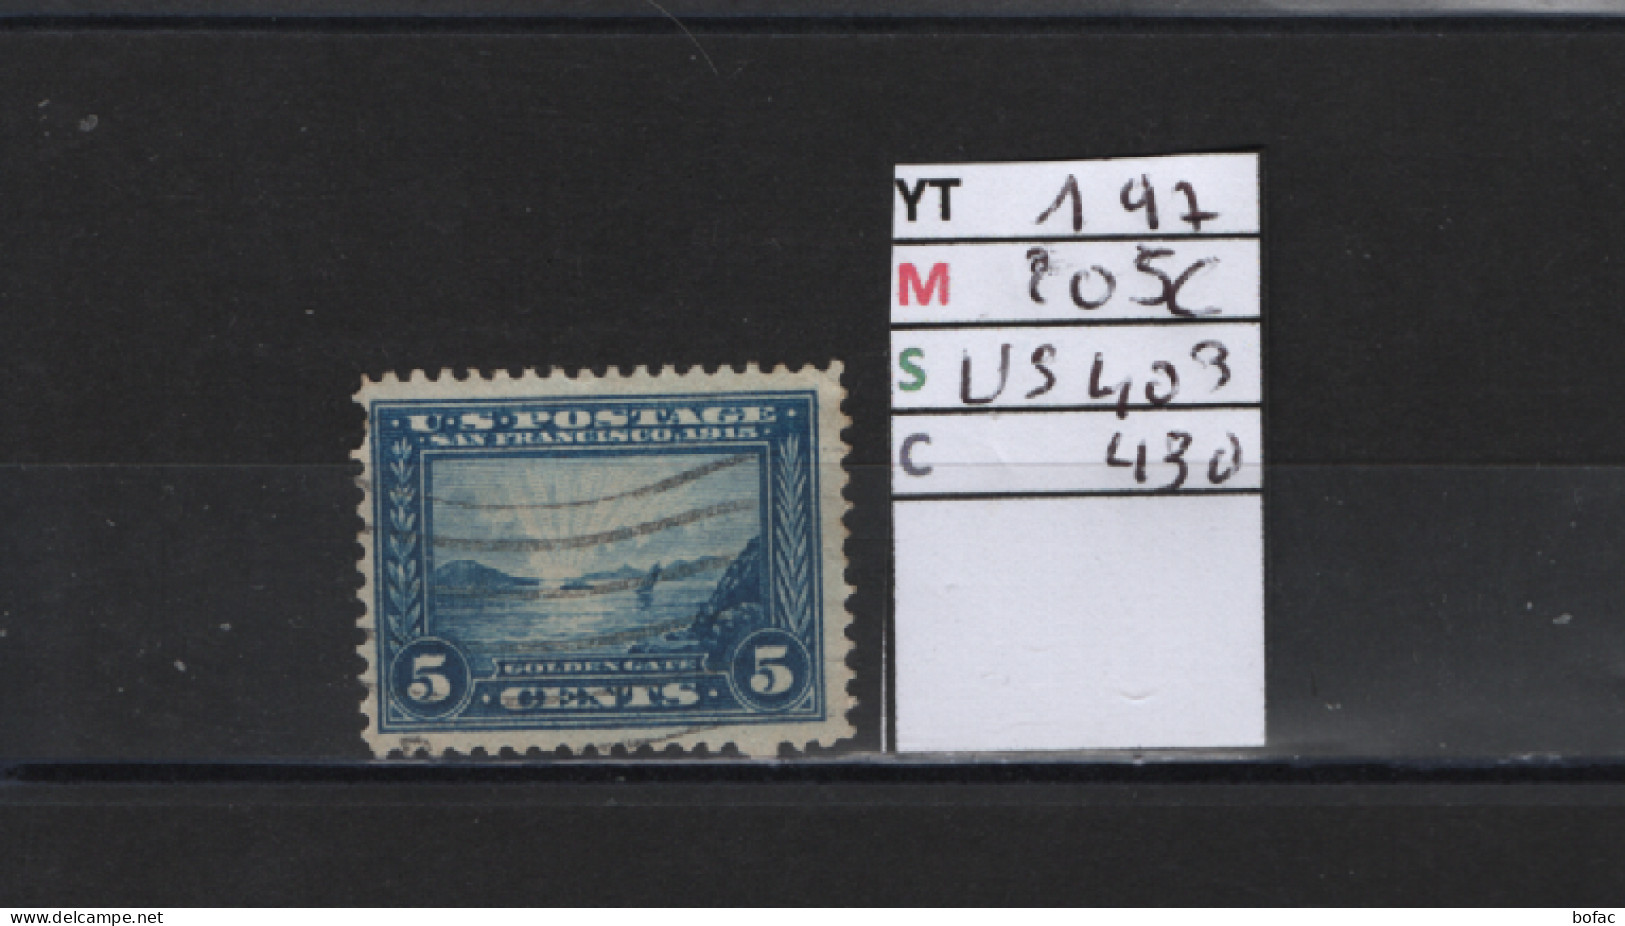 PRIX FIXE Obl 197 YT 205C MIC US403 SCOT US430 GIB San Francisco 1912 1915 Etats Unis 58/06 - Used Stamps